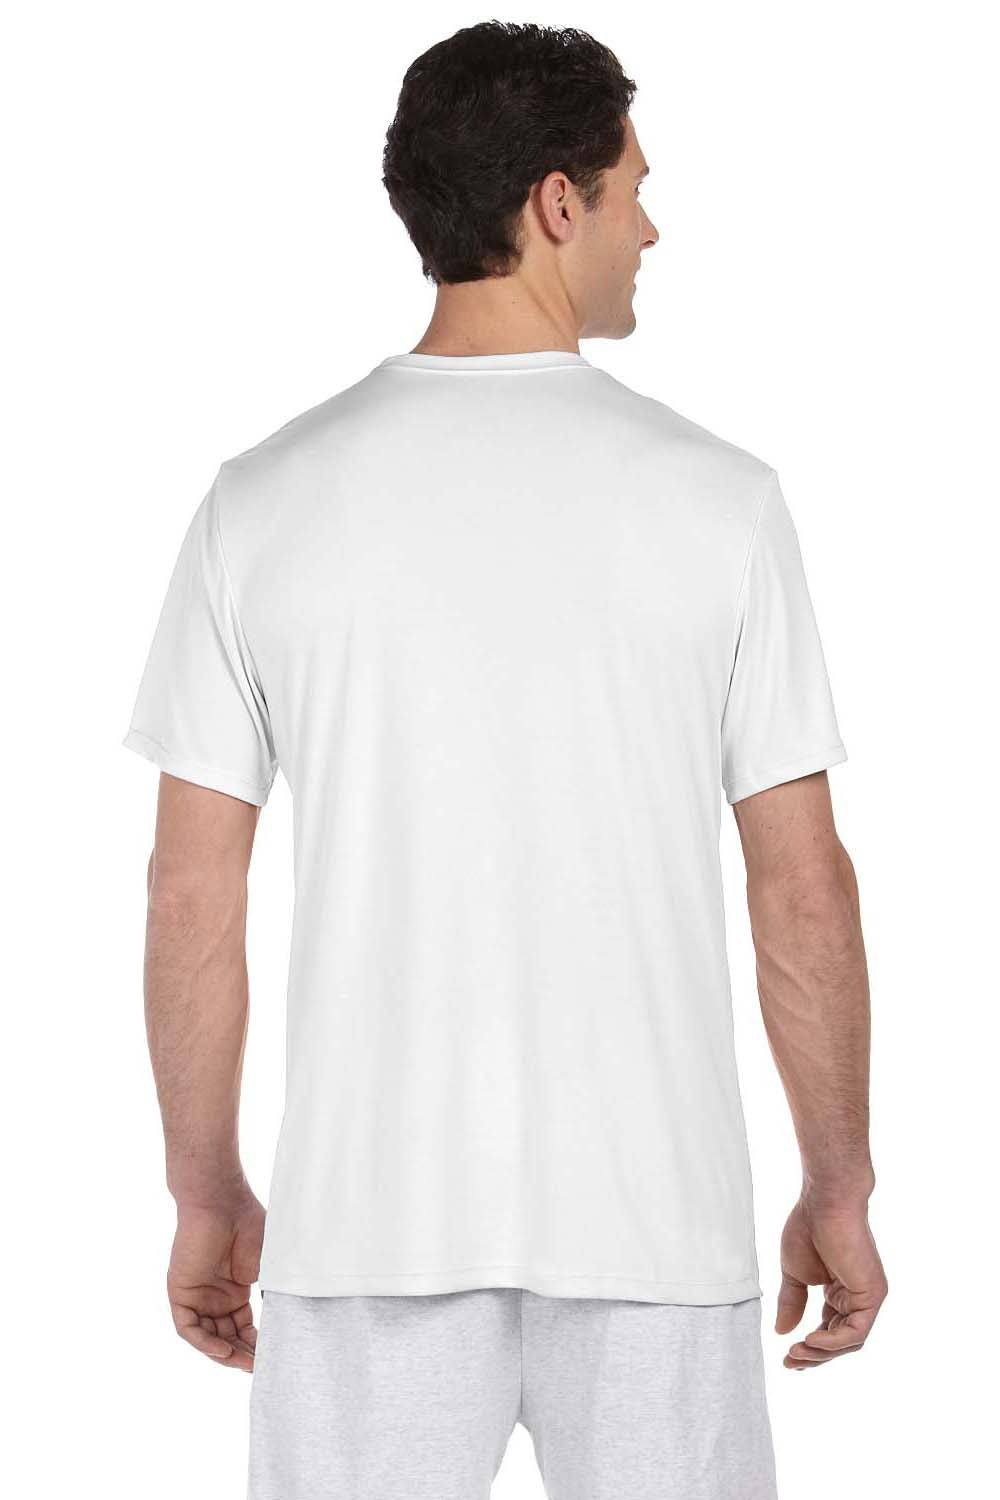 Hanes 4820 Mens Cool DRI FreshIQ Moisture Wicking Short Sleeve Crewneck T-Shirt White Back